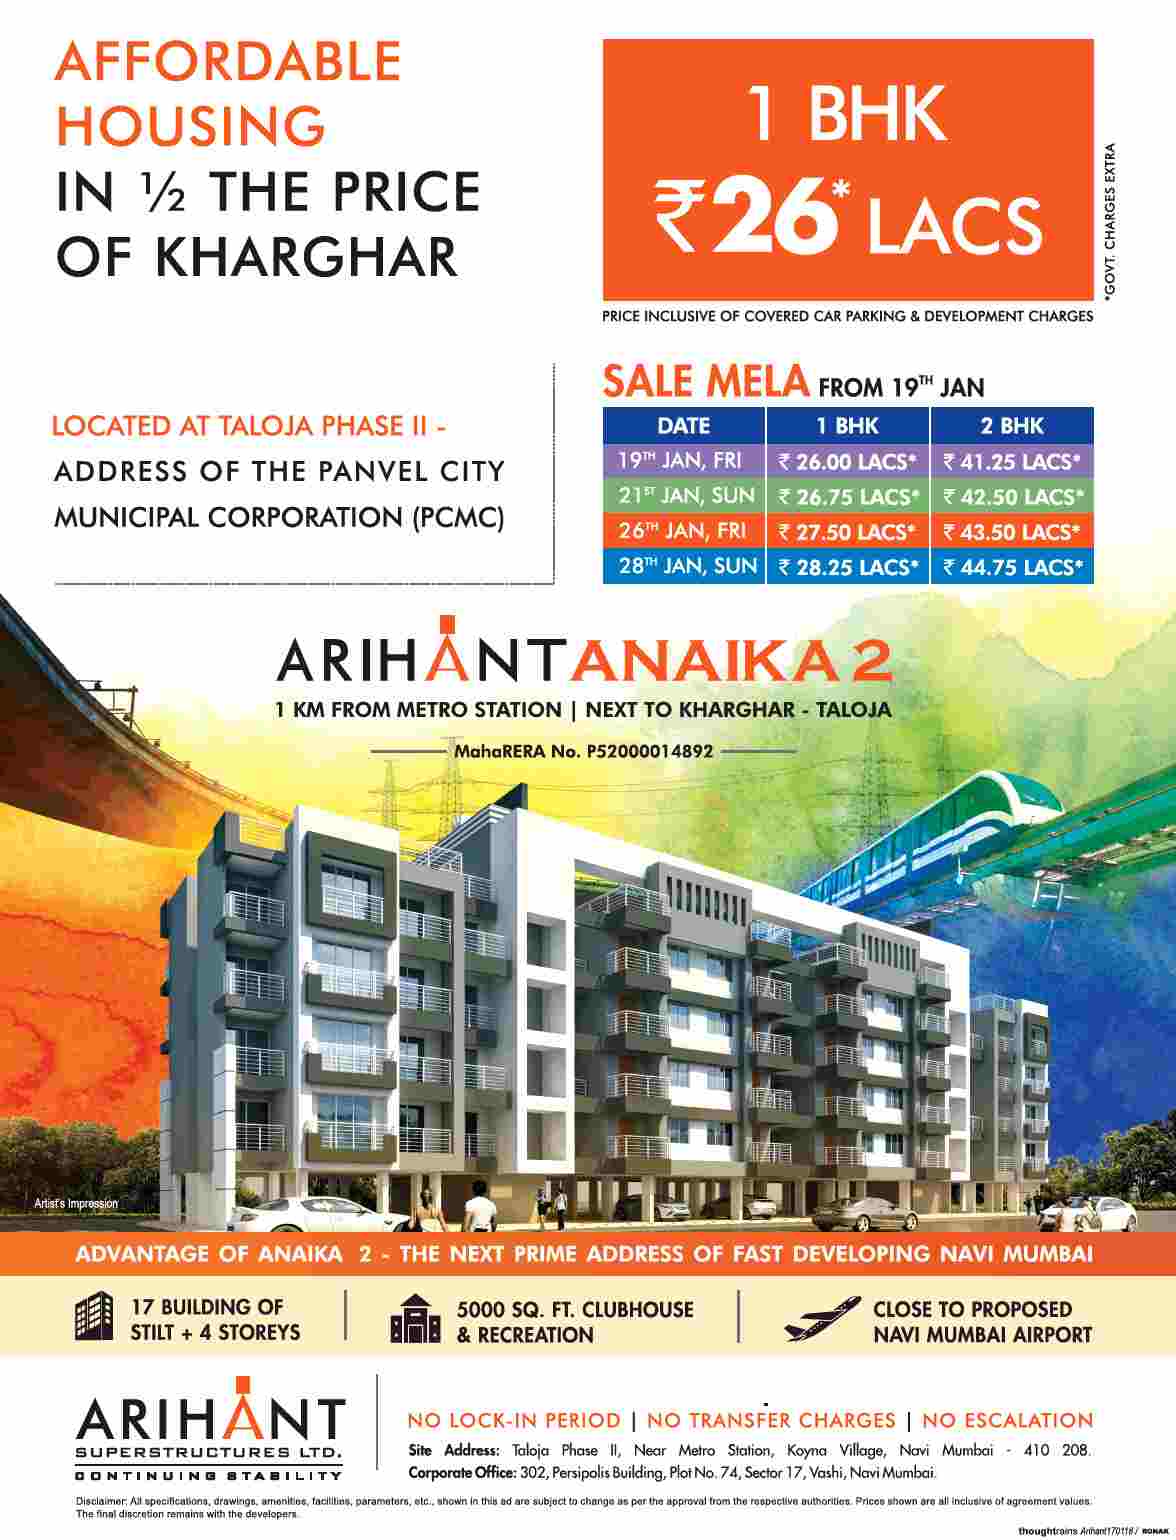 Book affordable house in half the price of Kharghar at Arihant Anaika in Navi Mumbai Update